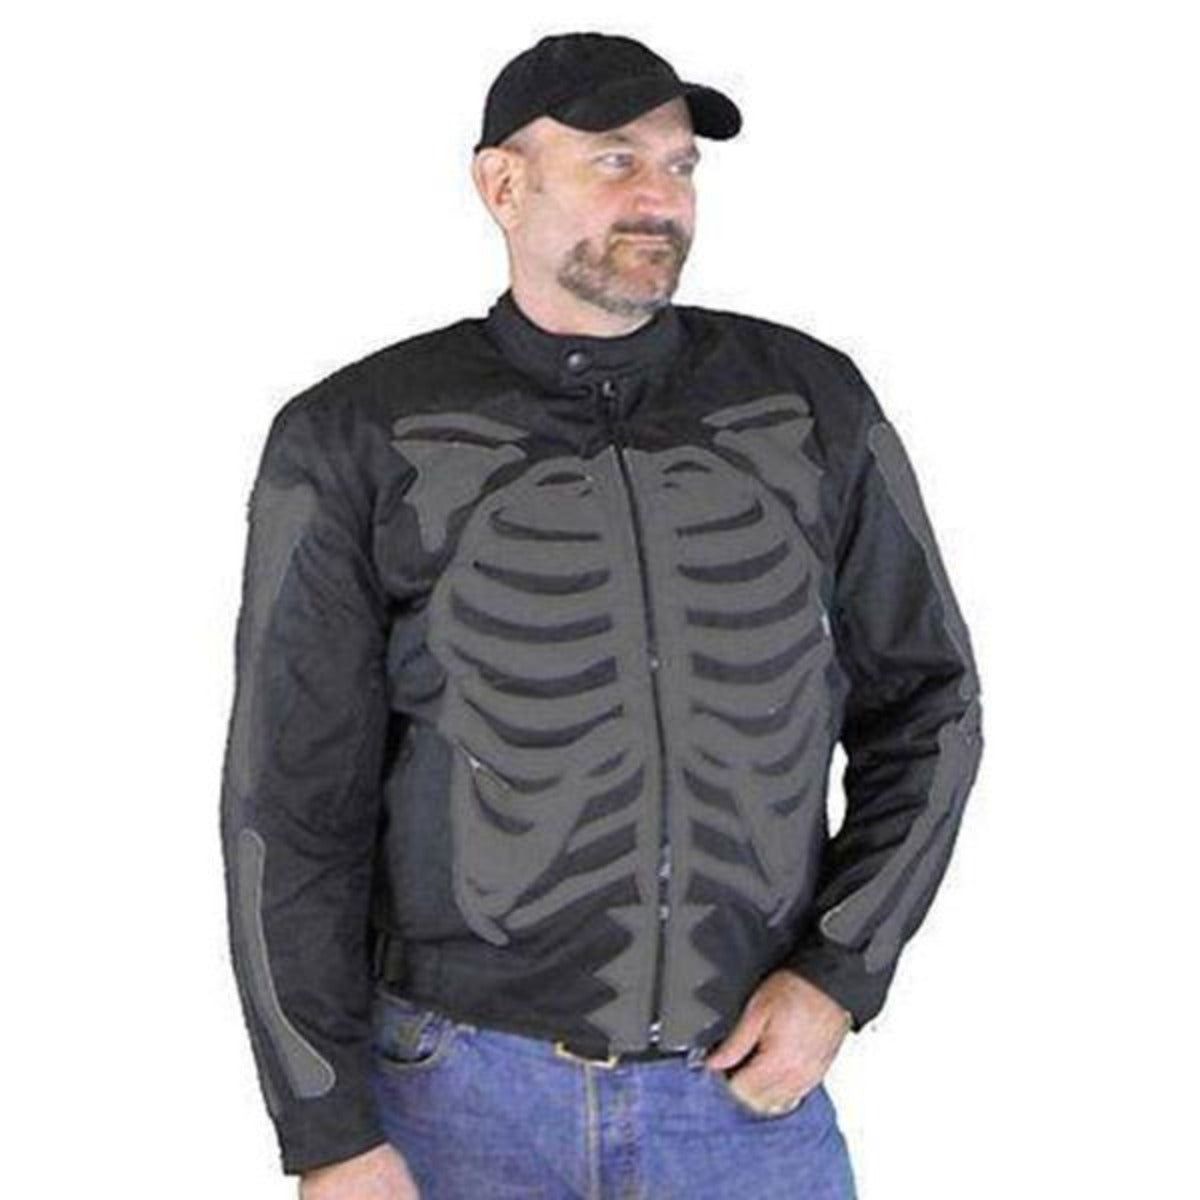 Vance Leather Men's Reflective Skeleton Textile Jacket with Dark Gray Bones